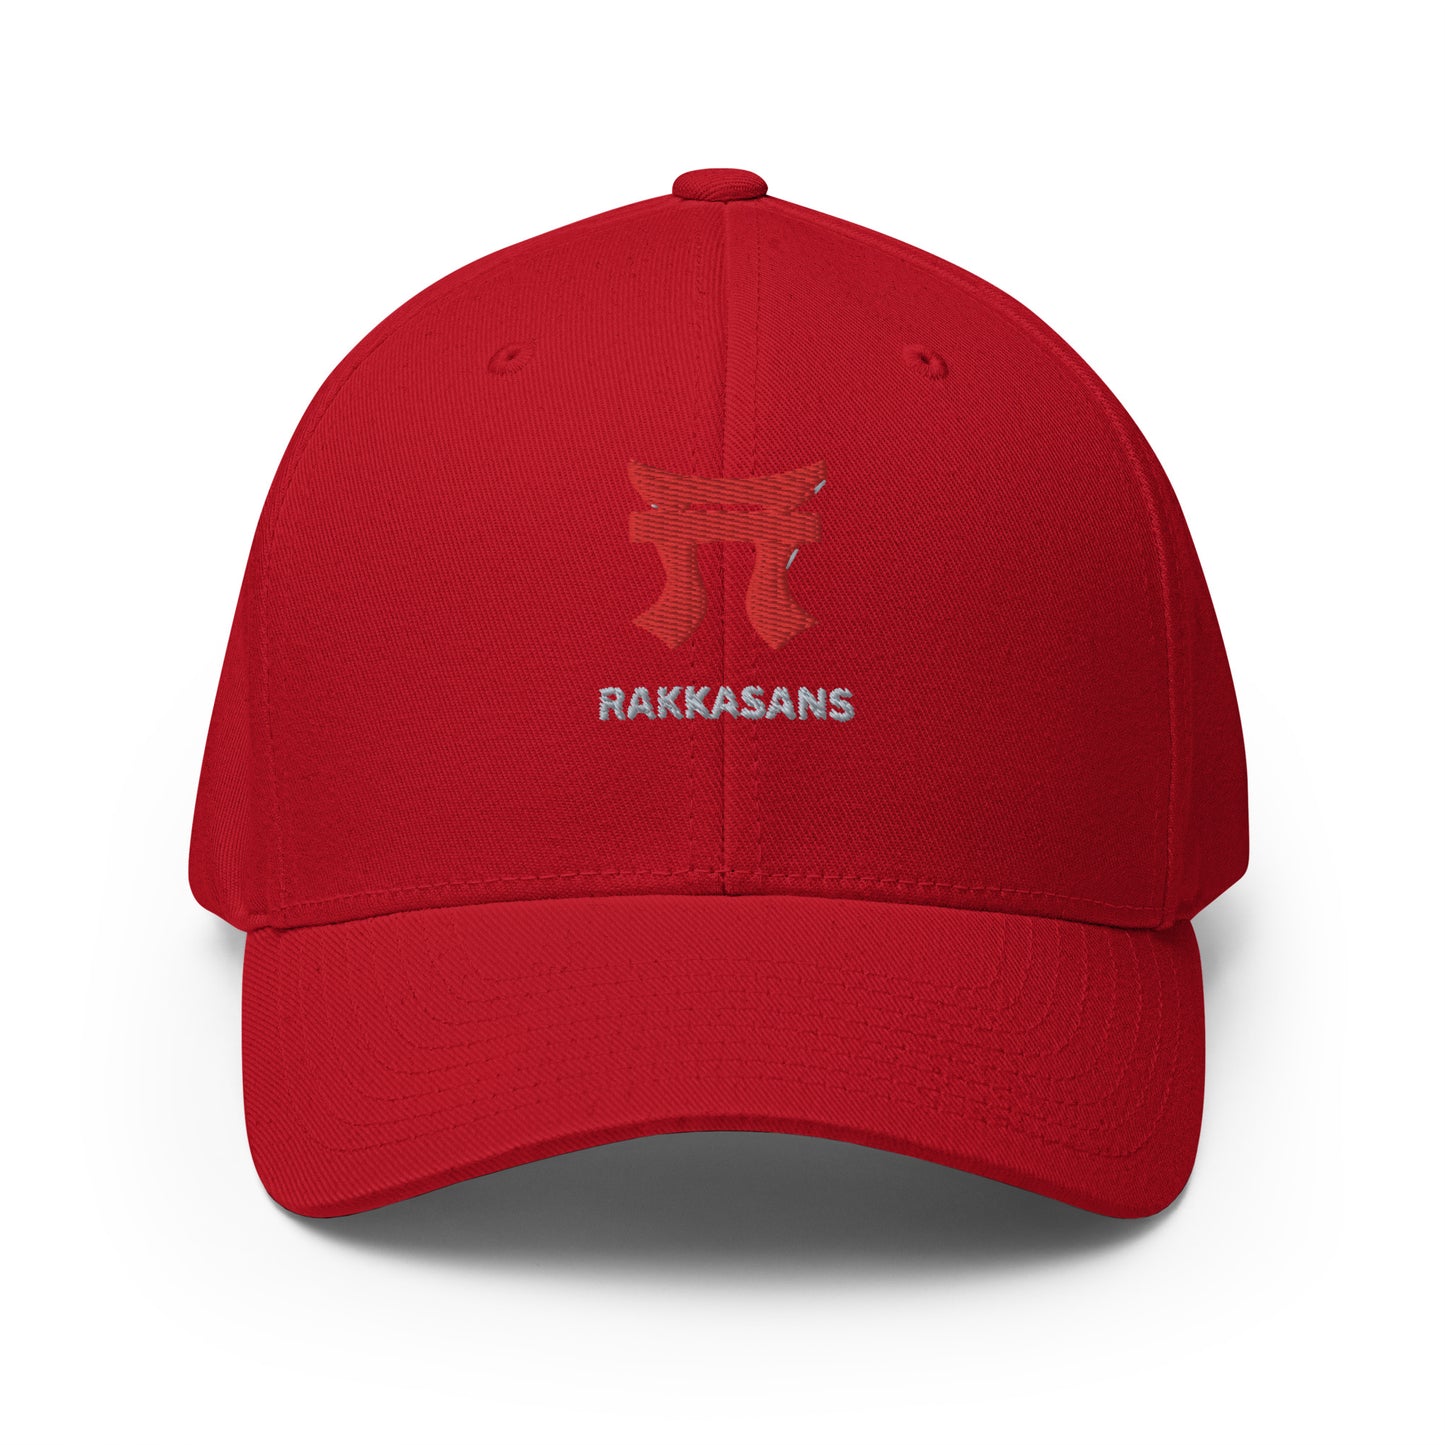 Rakkgear "Rakkasans" Red Embroidered Fitted Baseball Cap: Multicam black cap with iconic Rakkasans Logo embroidery on the